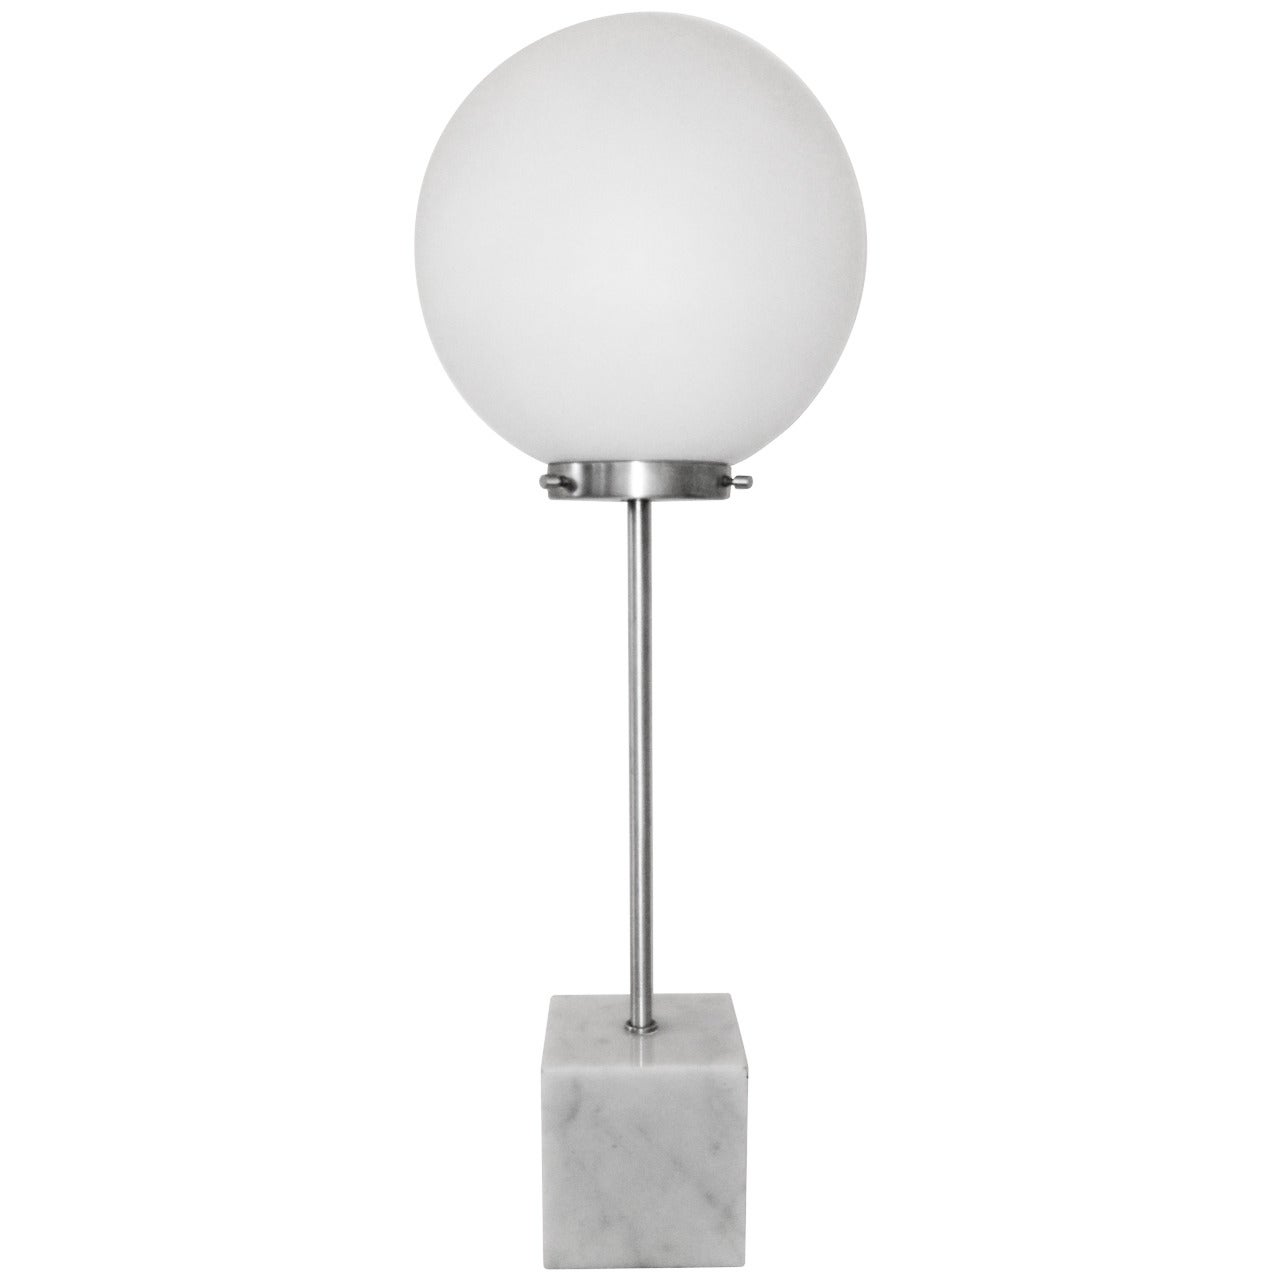 Paul Mayen Ball Lamp For Sale